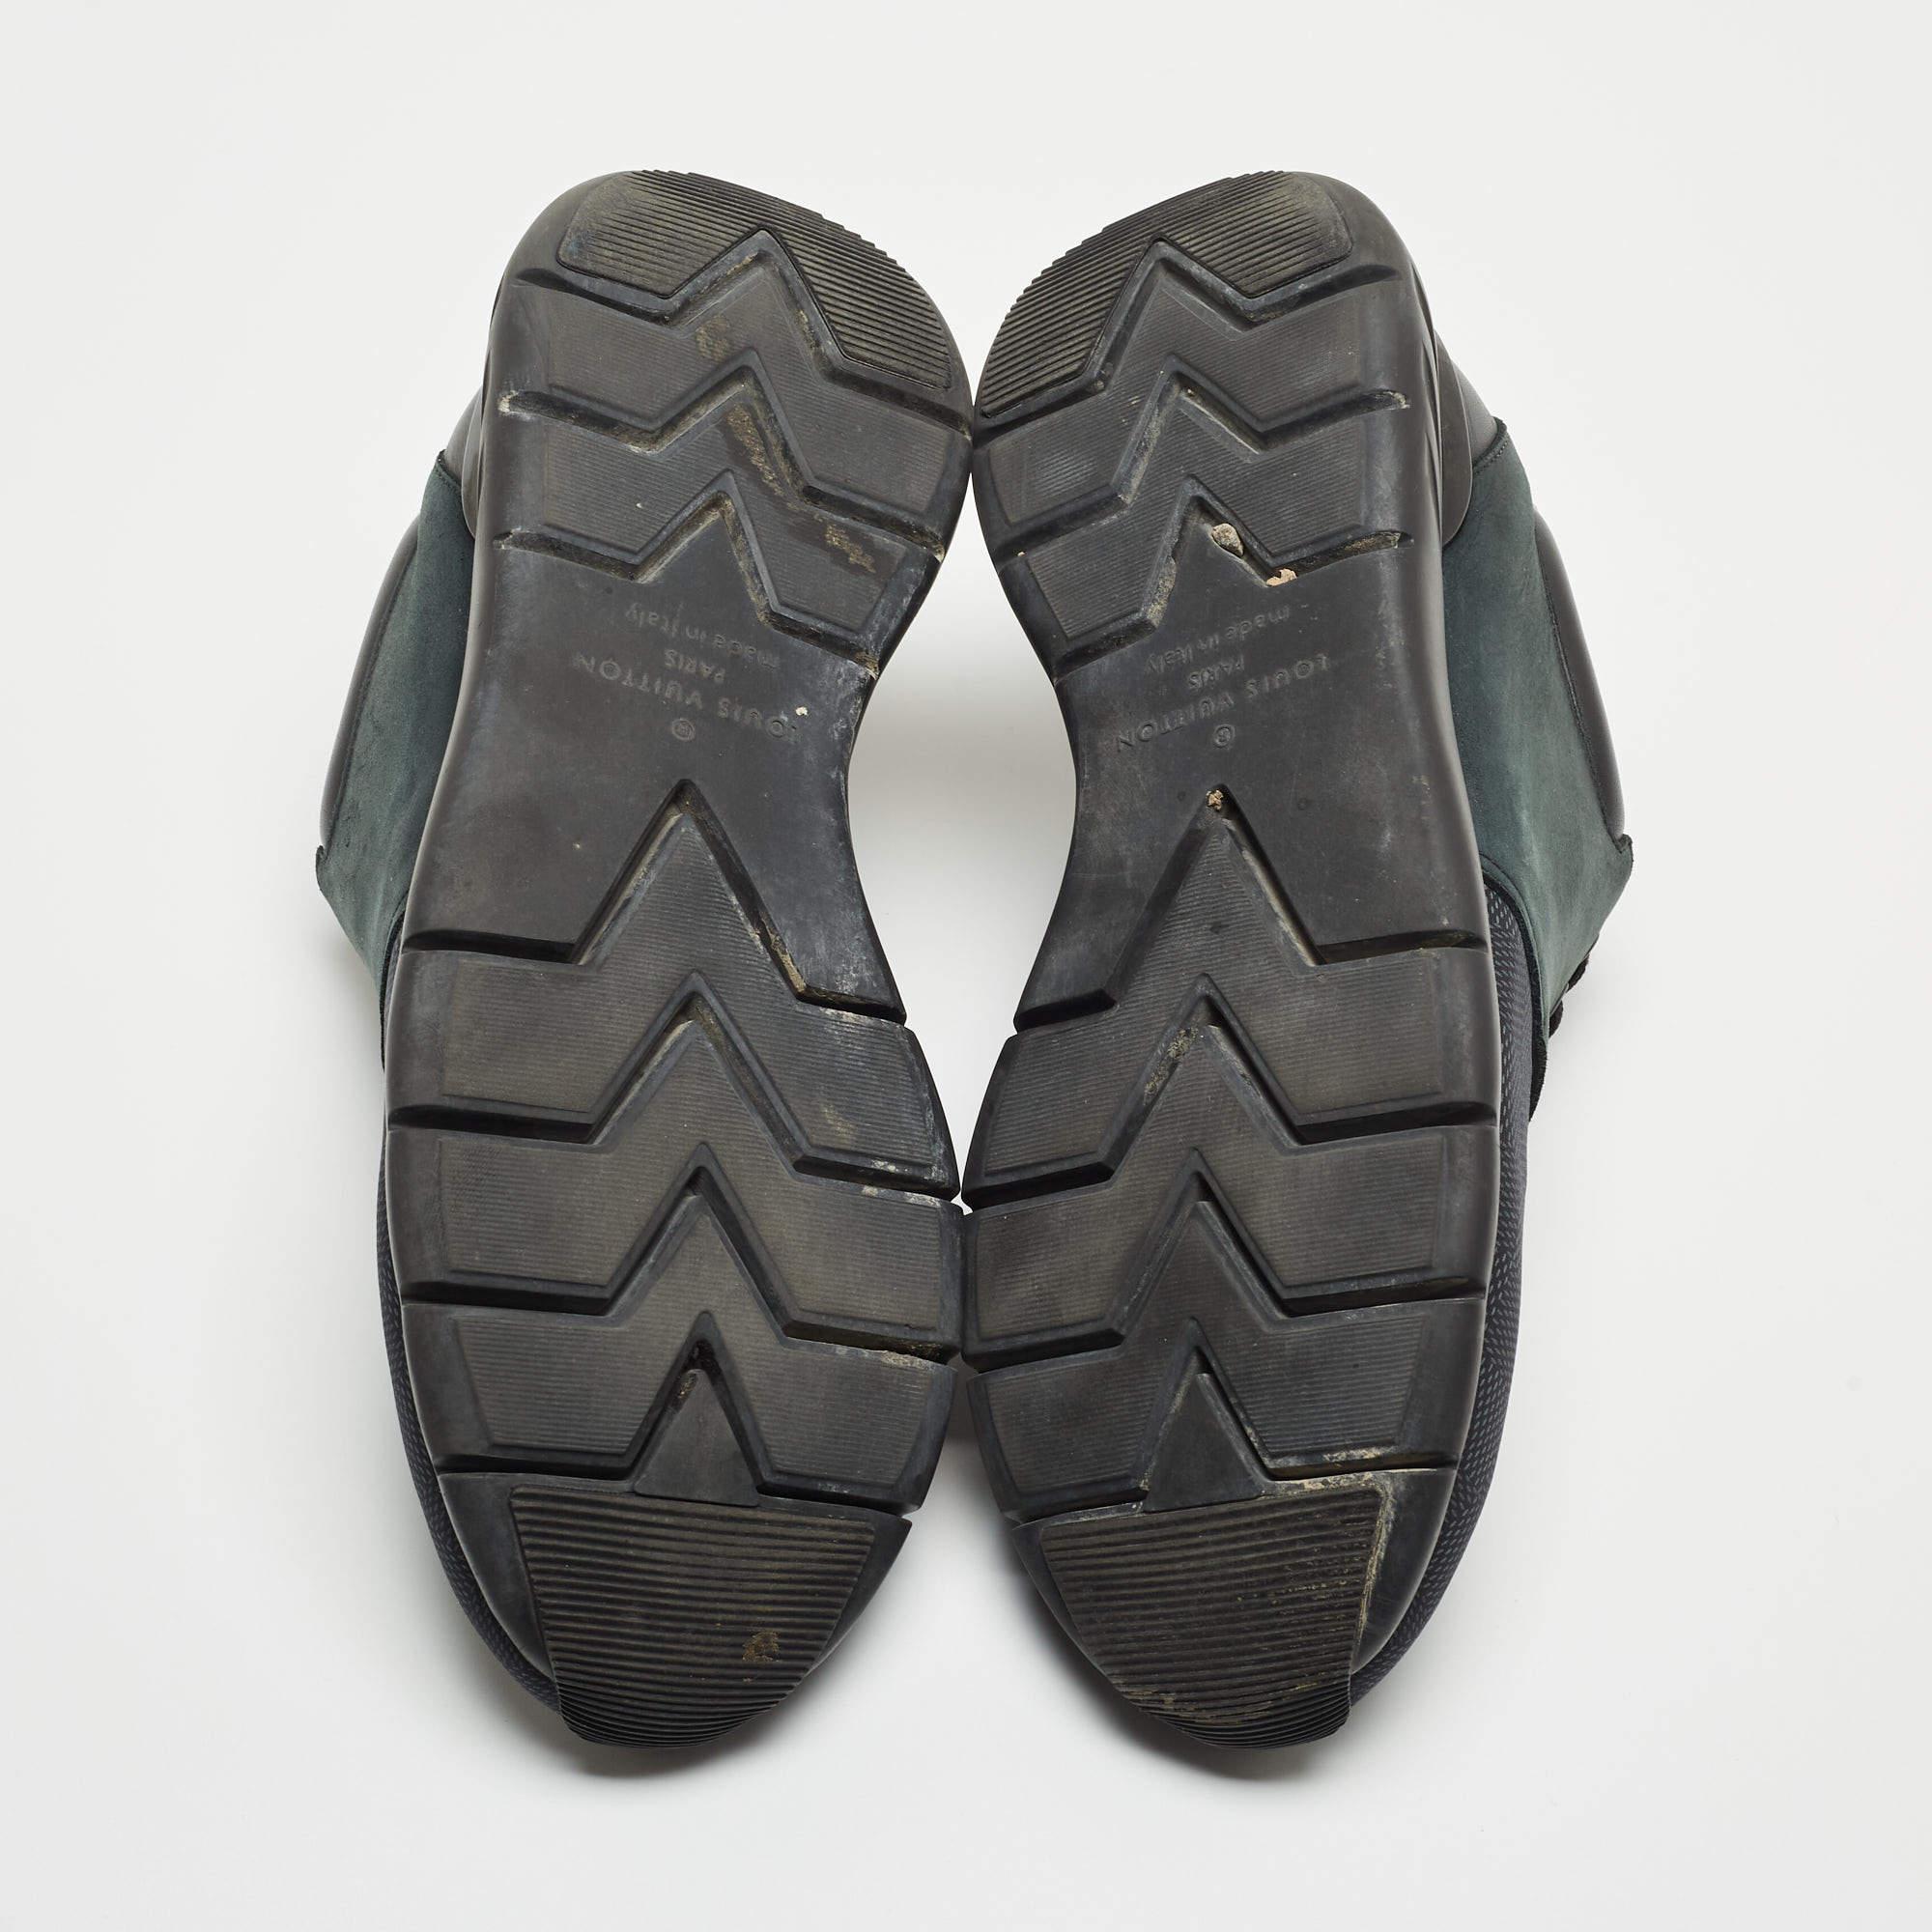 Louis Vuitton Black/Green Leather and Nylon Fastlane Sneakers Size 41 3